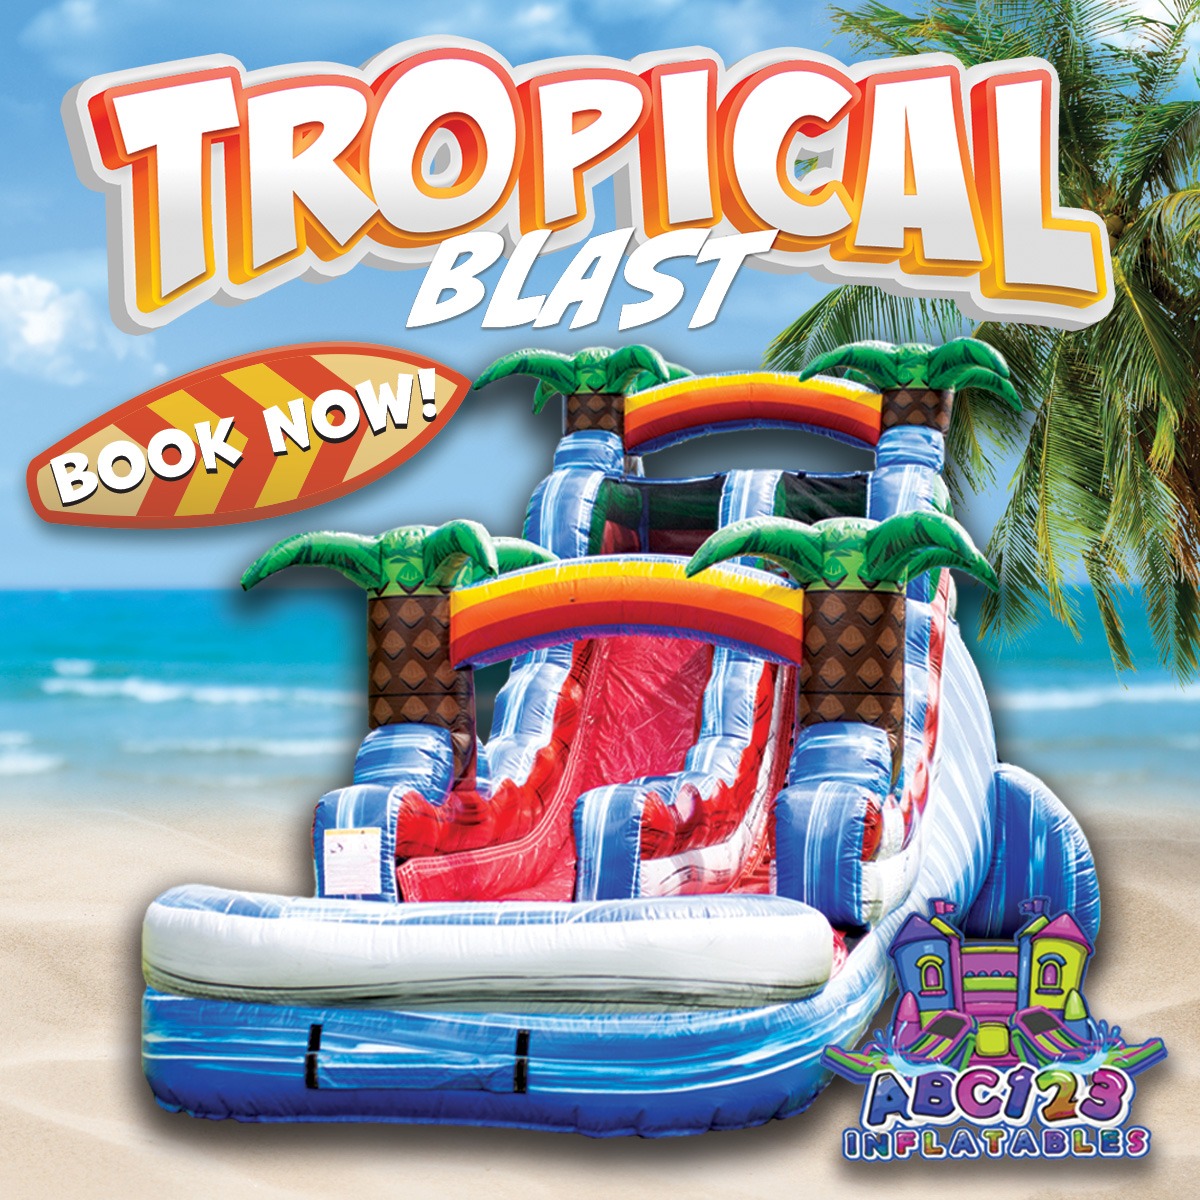 Tropical Blast Water Slide Rental - Birmingham AL - ABC123 Inflatables